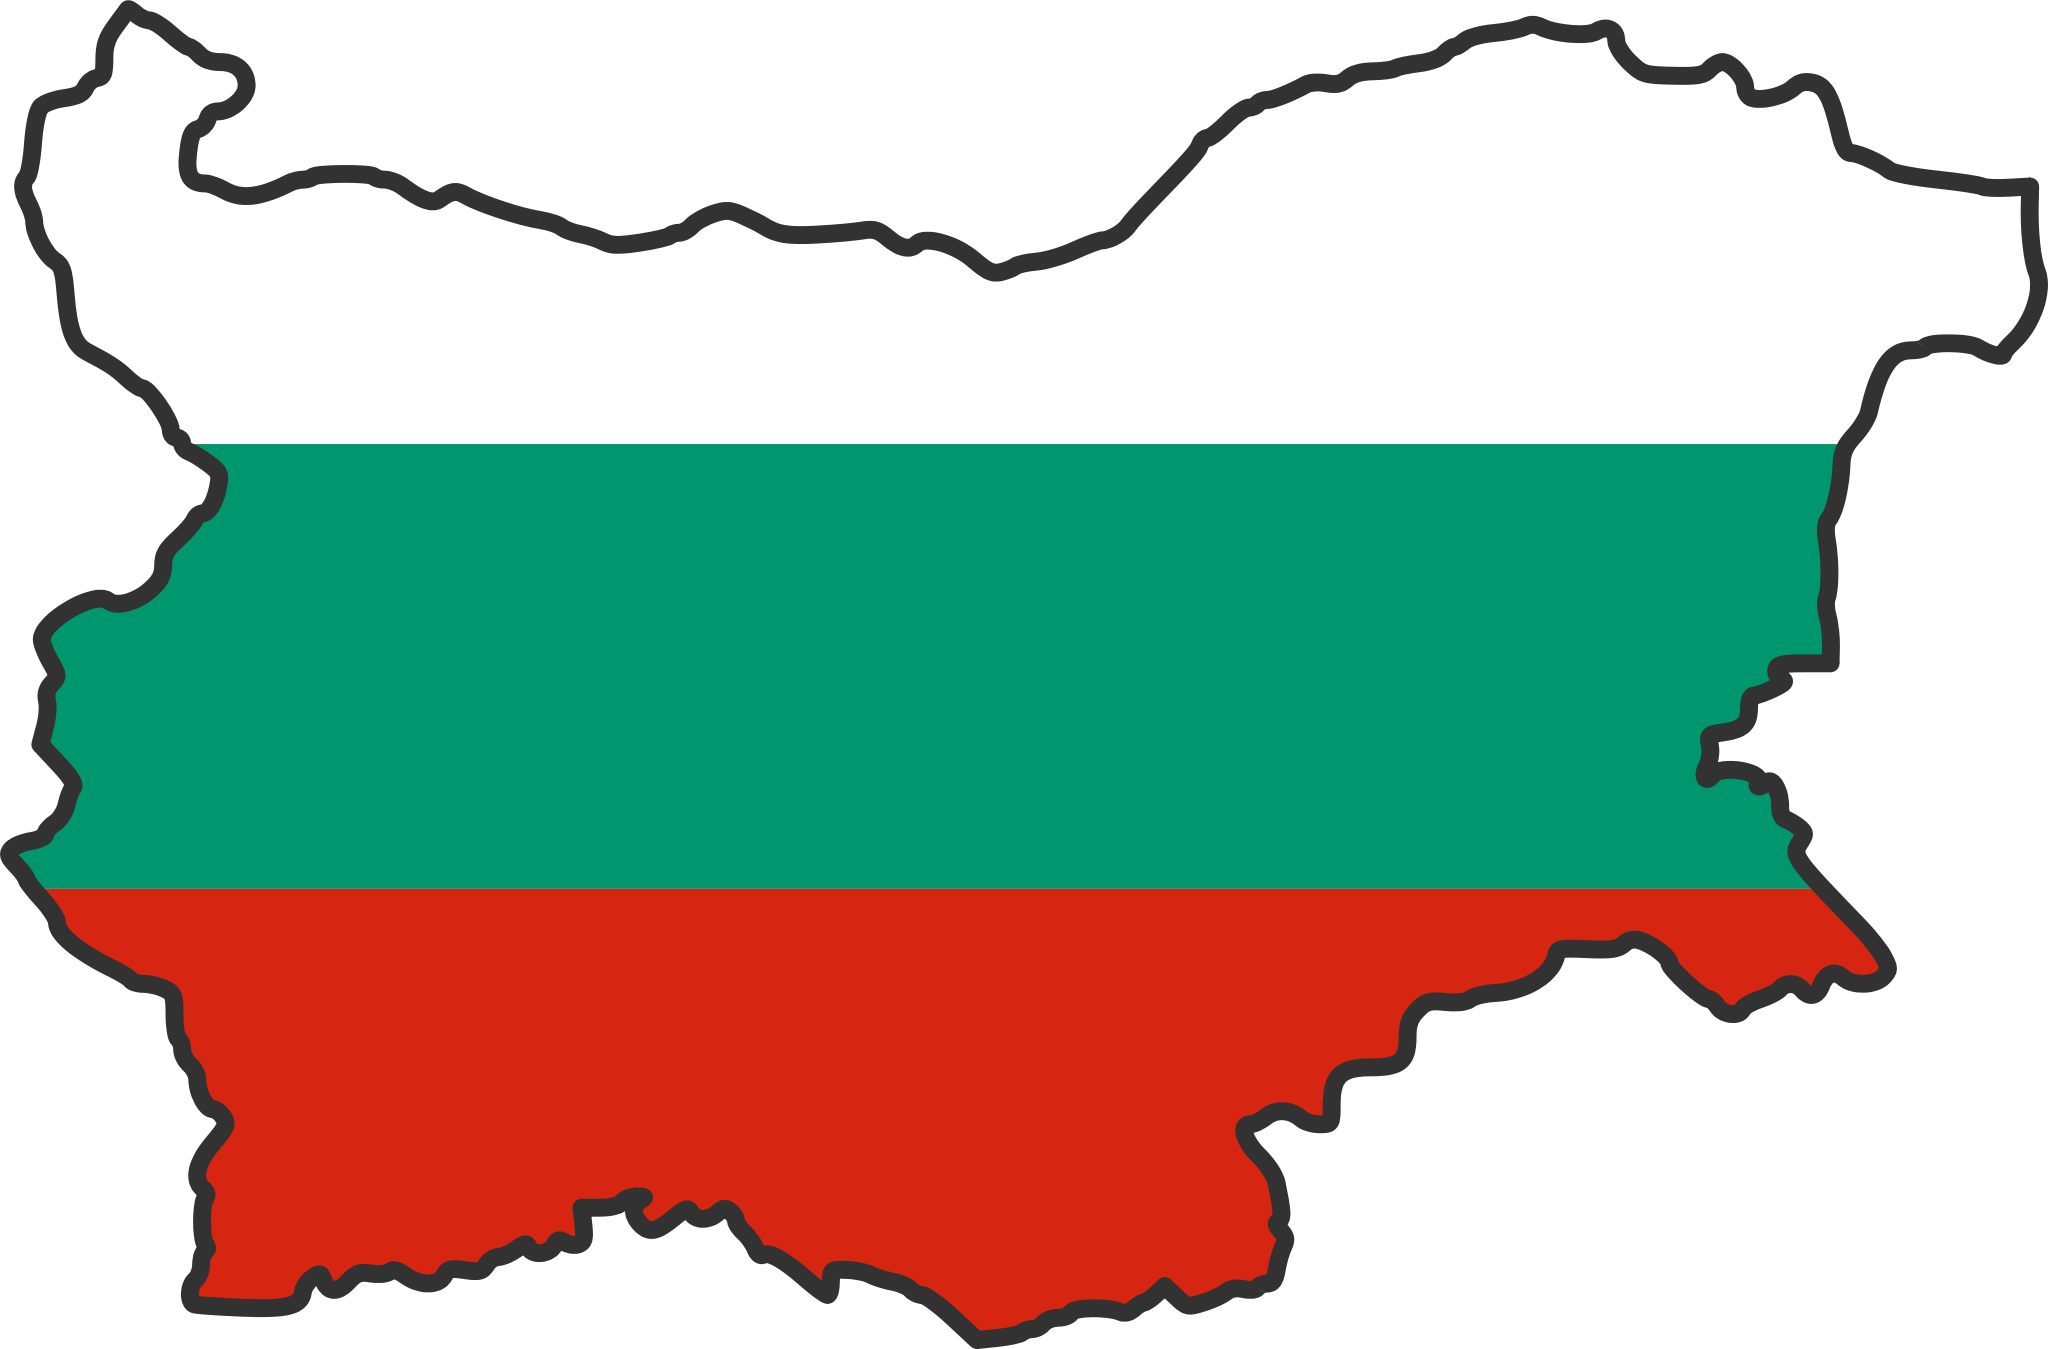 Bulgaria_flag_map